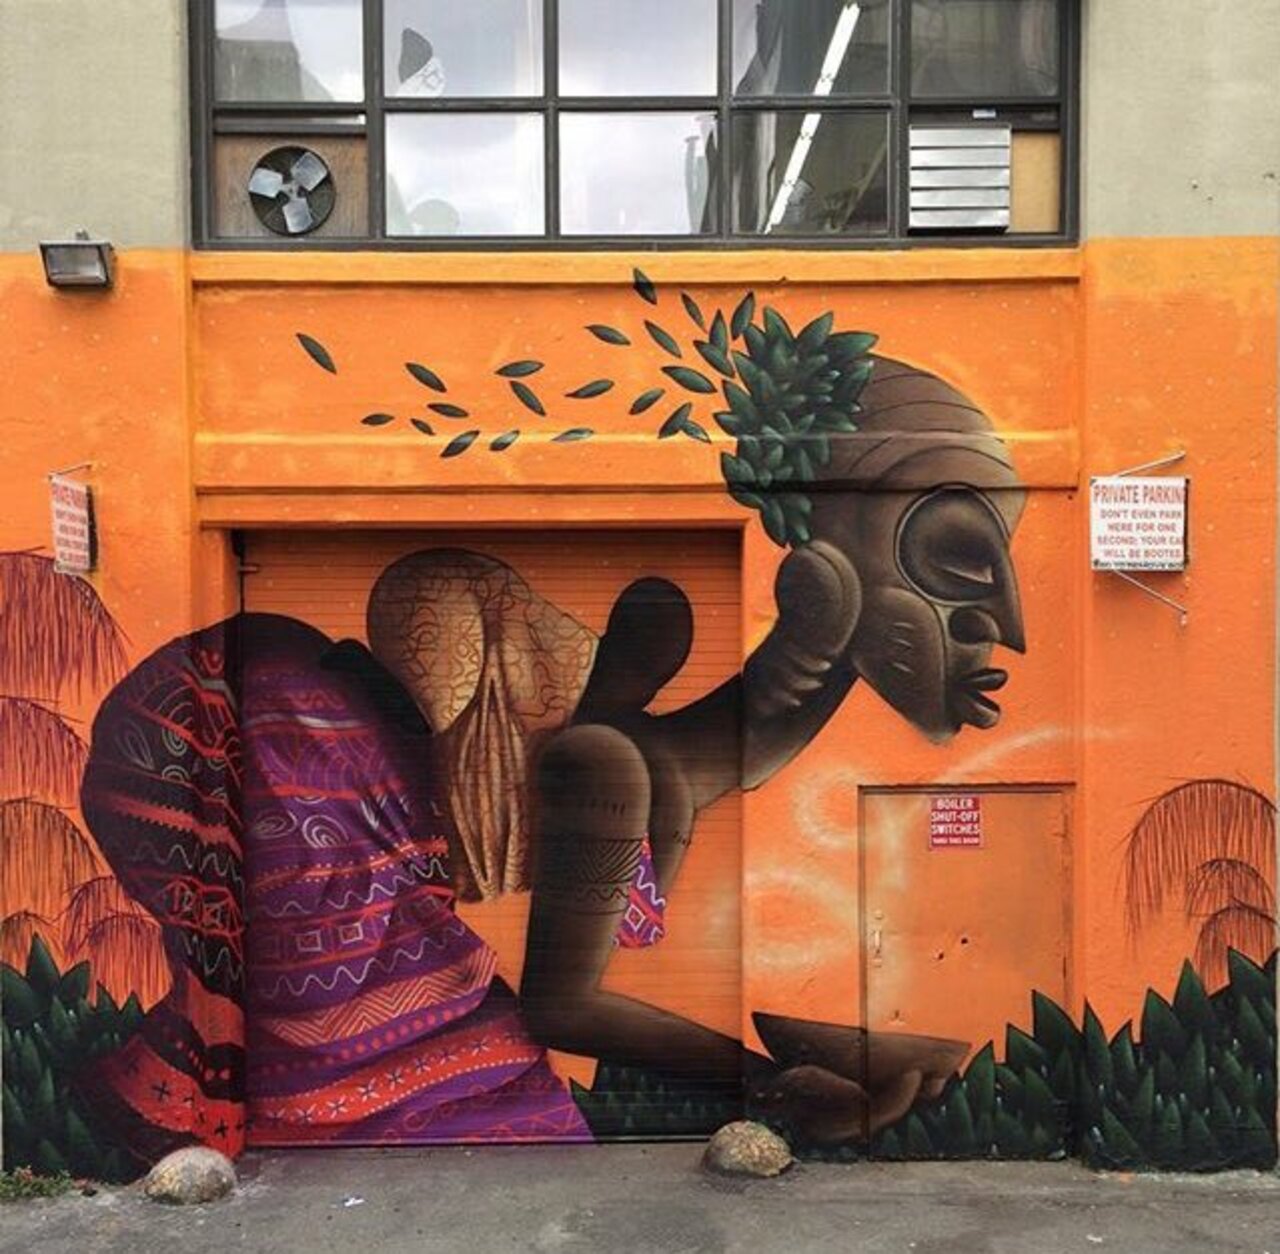 RT @JedrickofGrimm: New Street Art by Alexandre Keto in NYC 

#art #graffiti #mural #streetart https://t.co/nXFfx24LR7